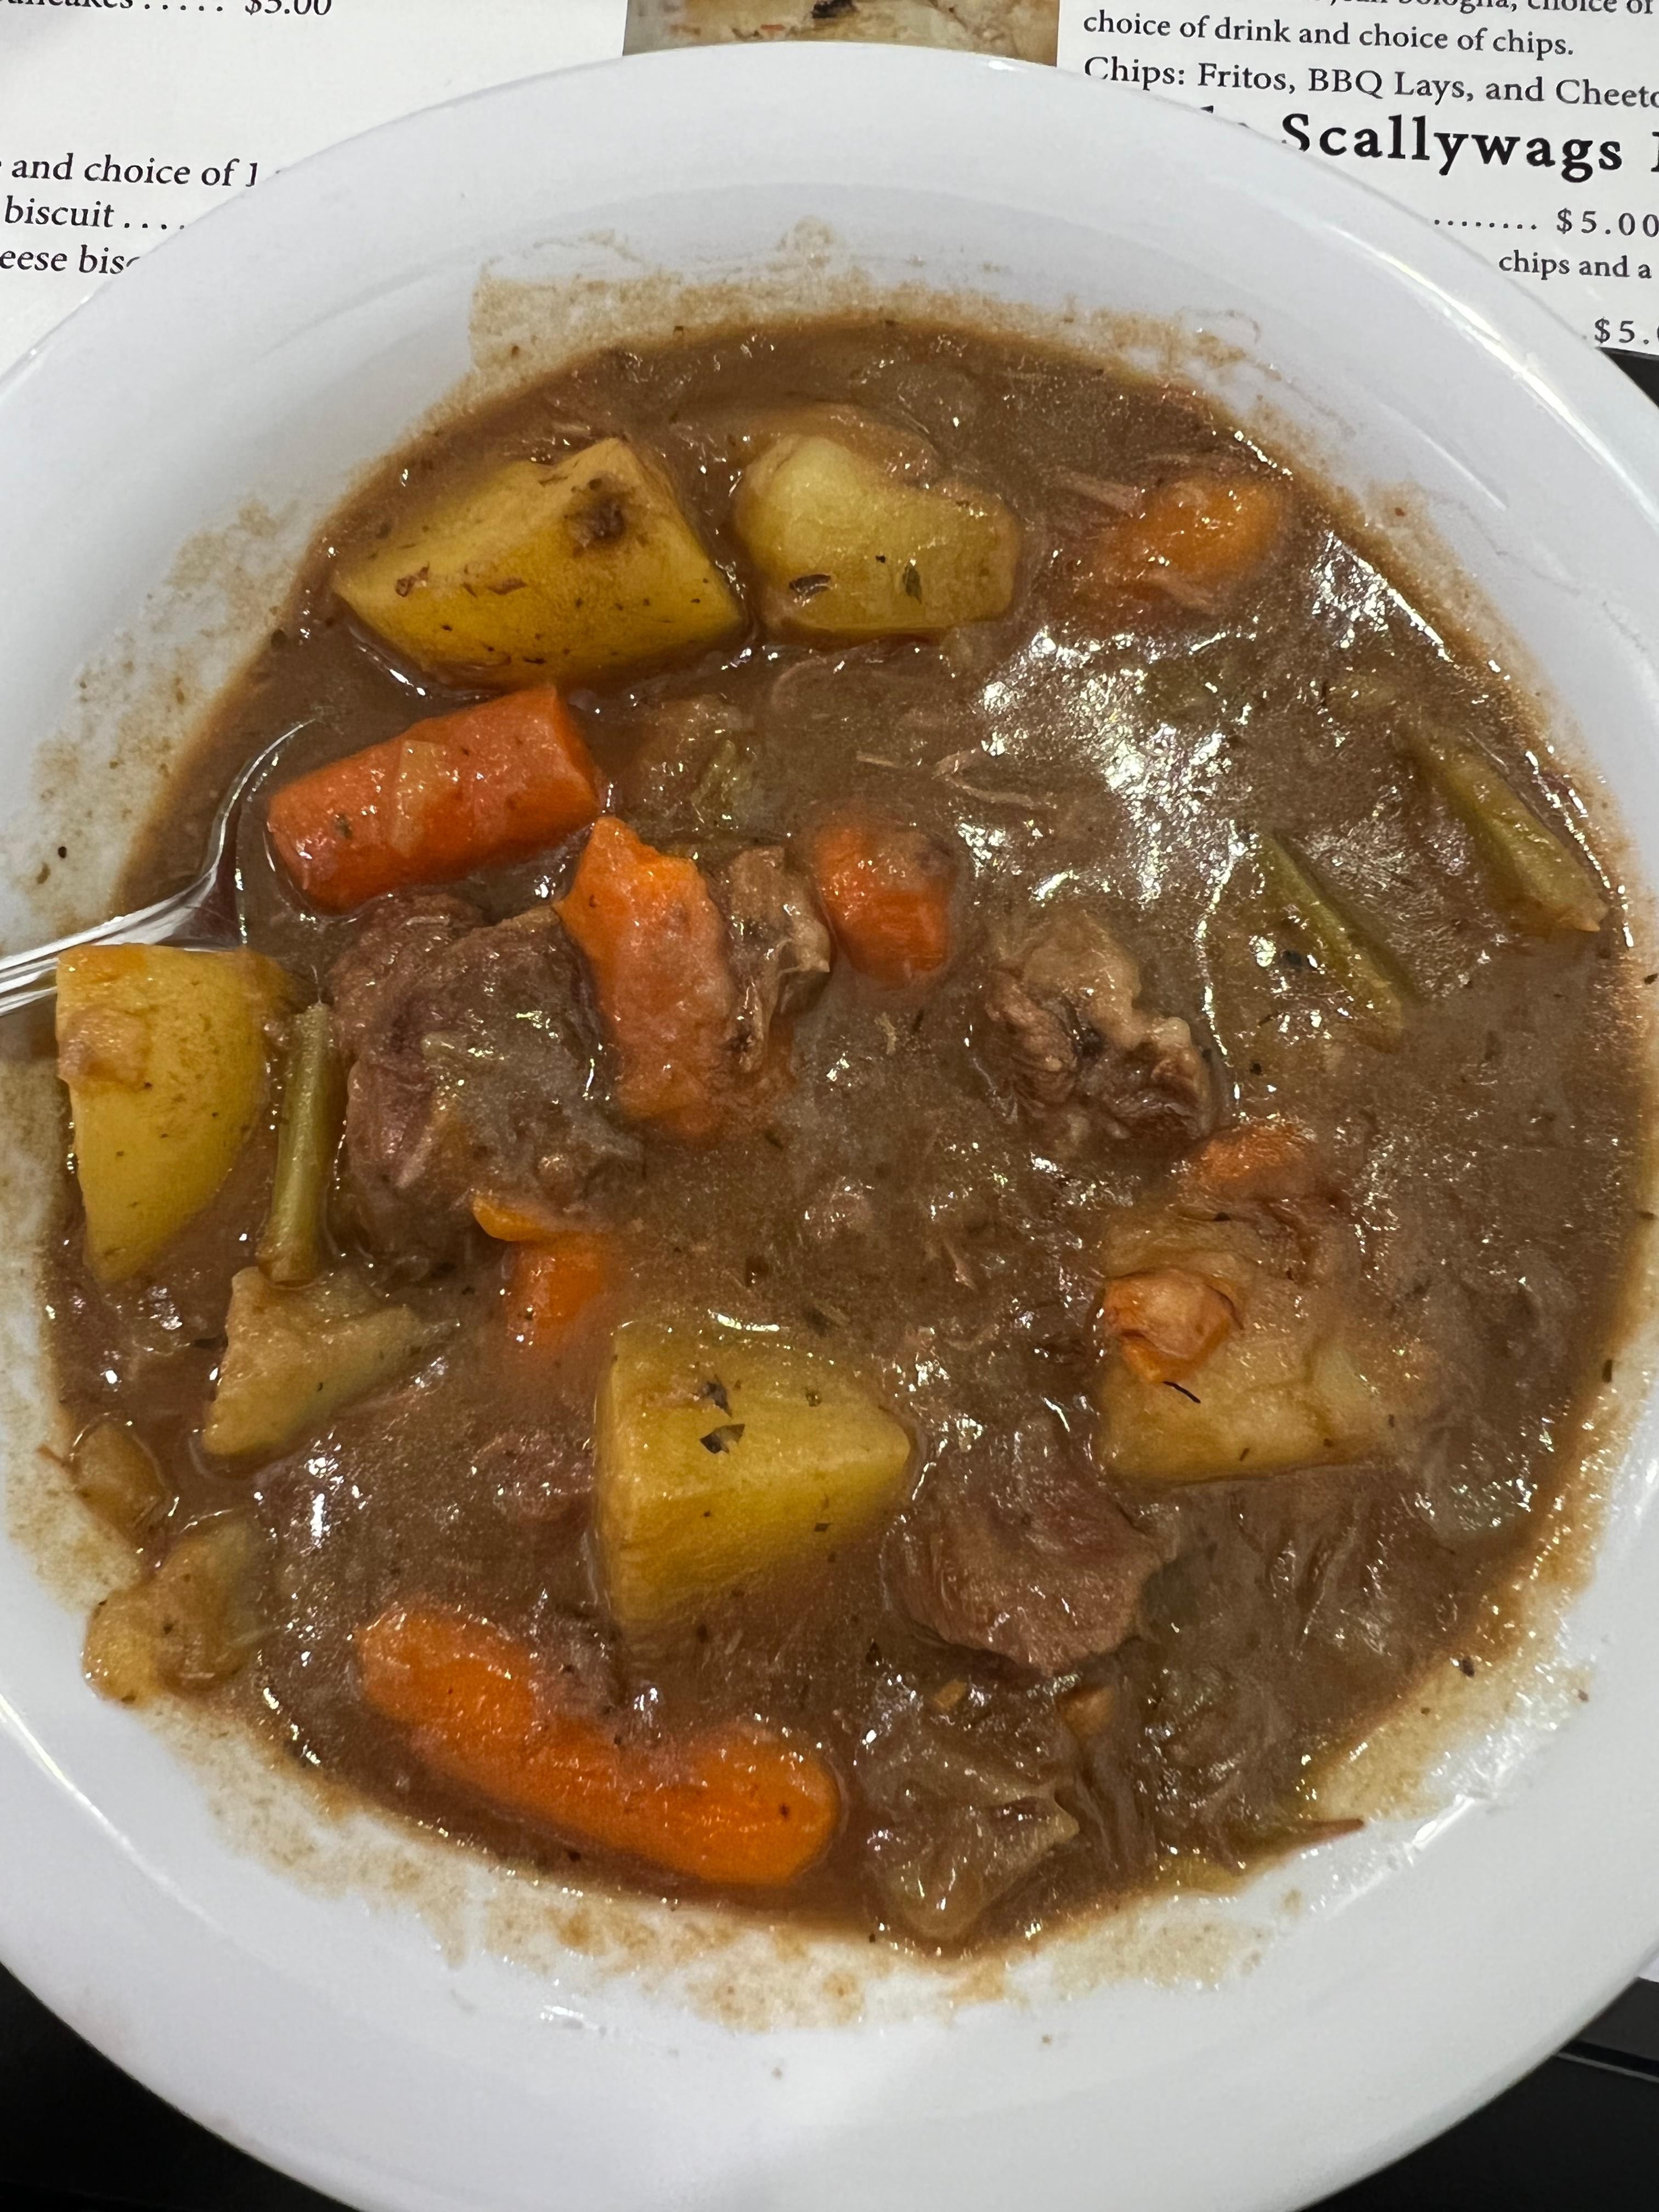 Homemade beef stew